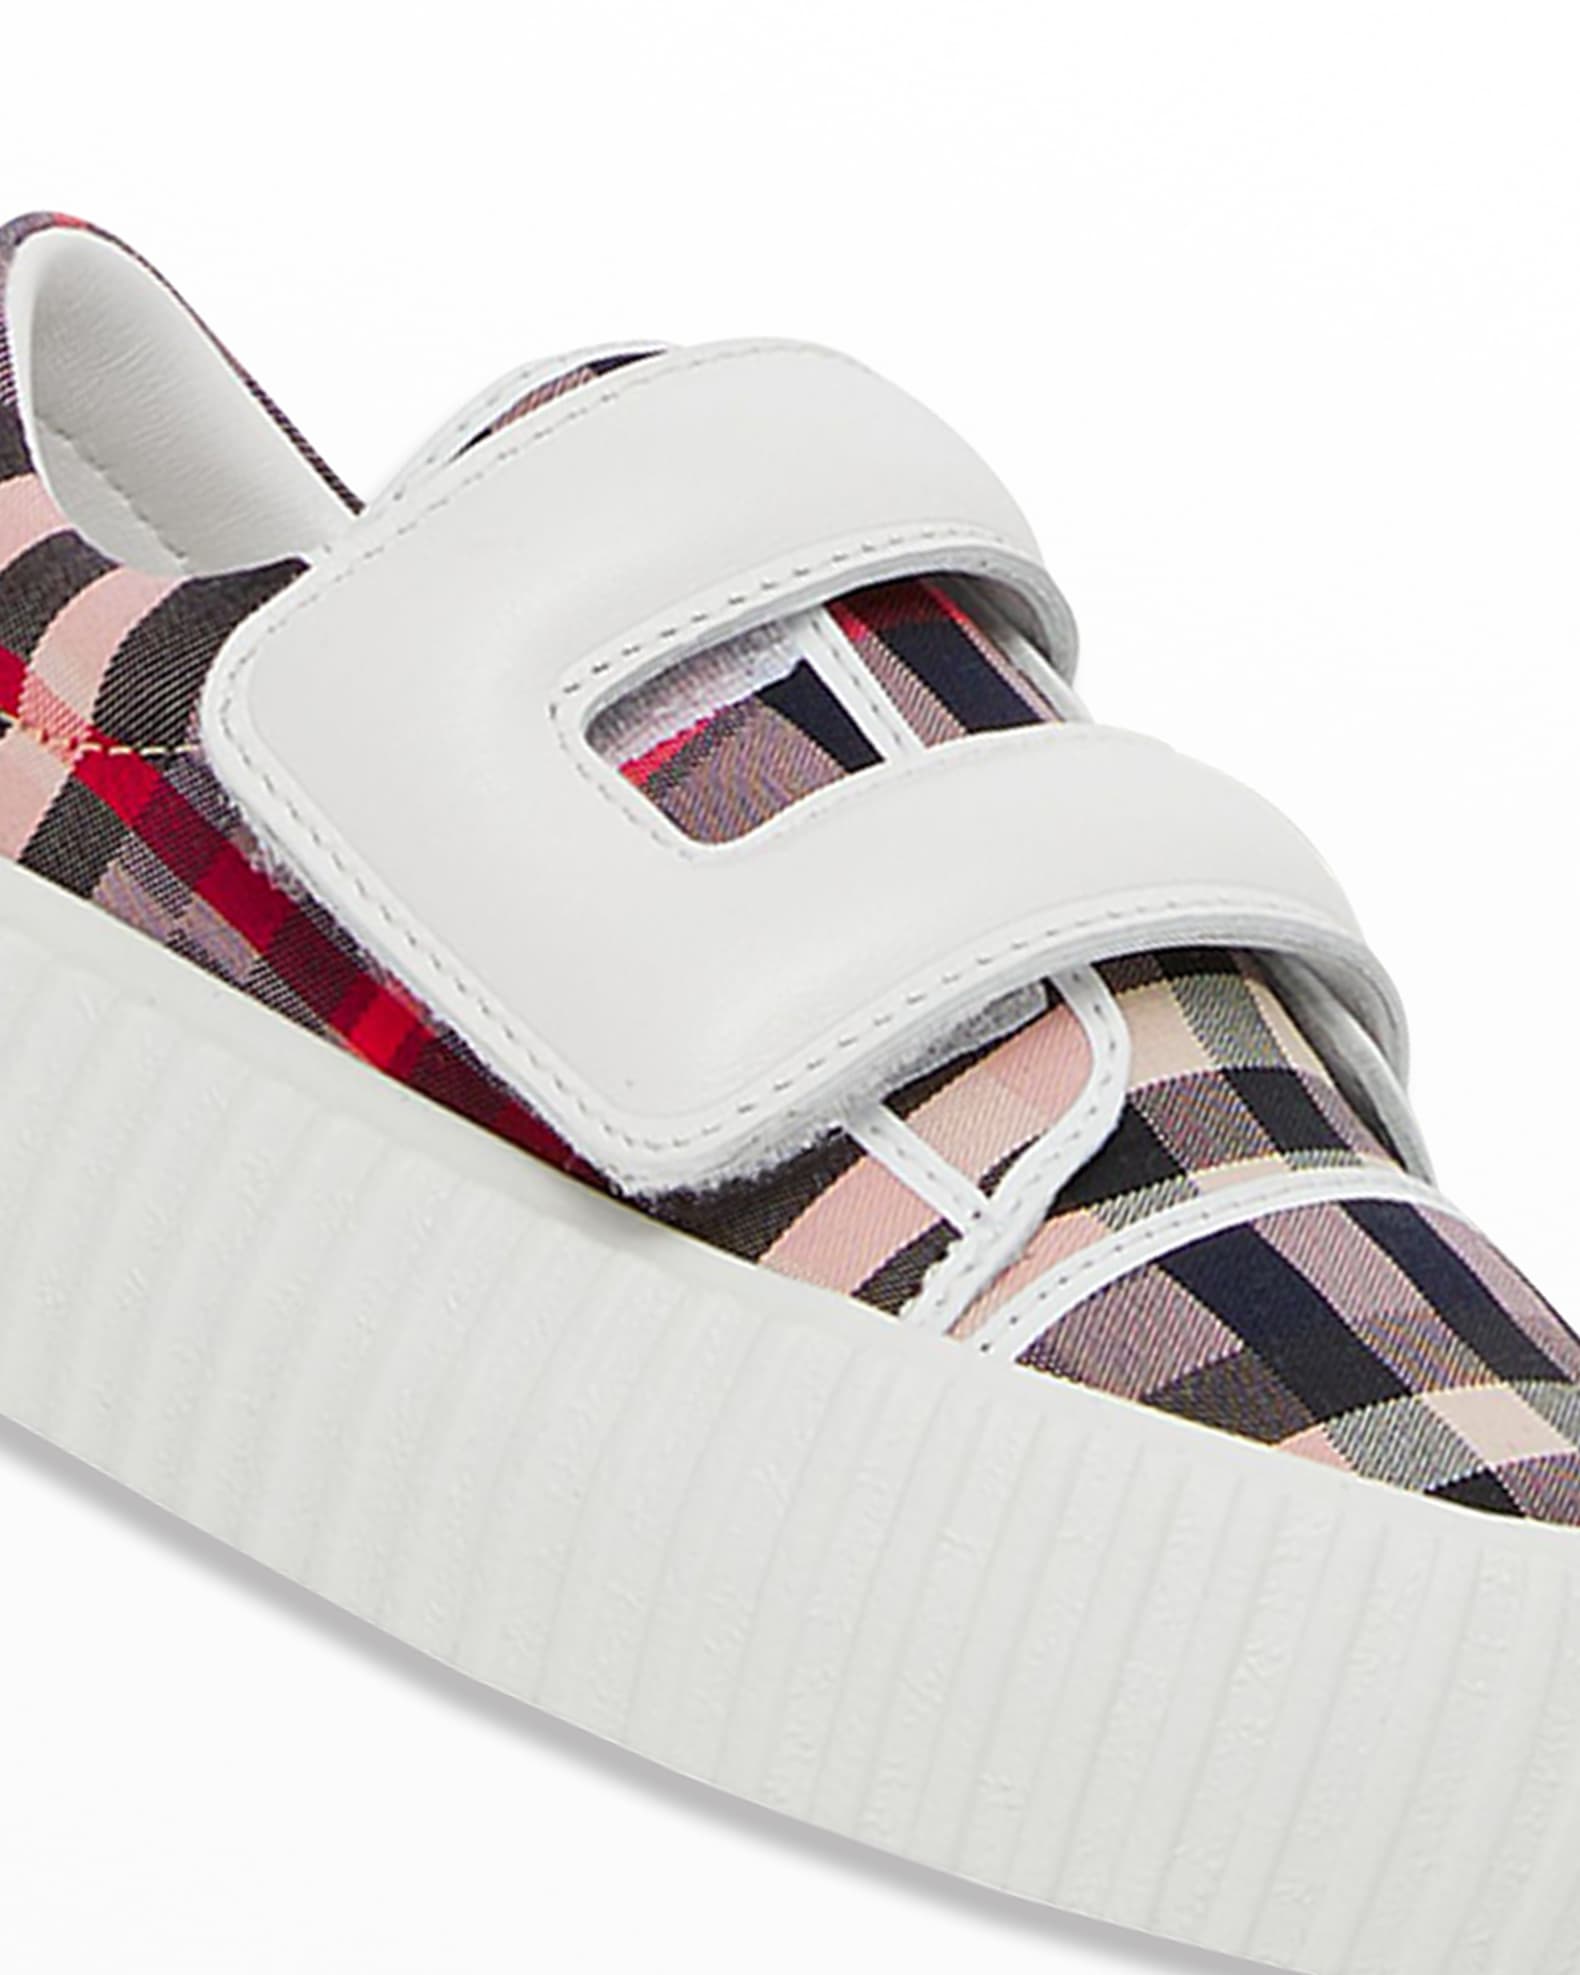 Burberry Girl's Mark Checkboard Sneakers, Baby/Toddler | Neiman Marcus